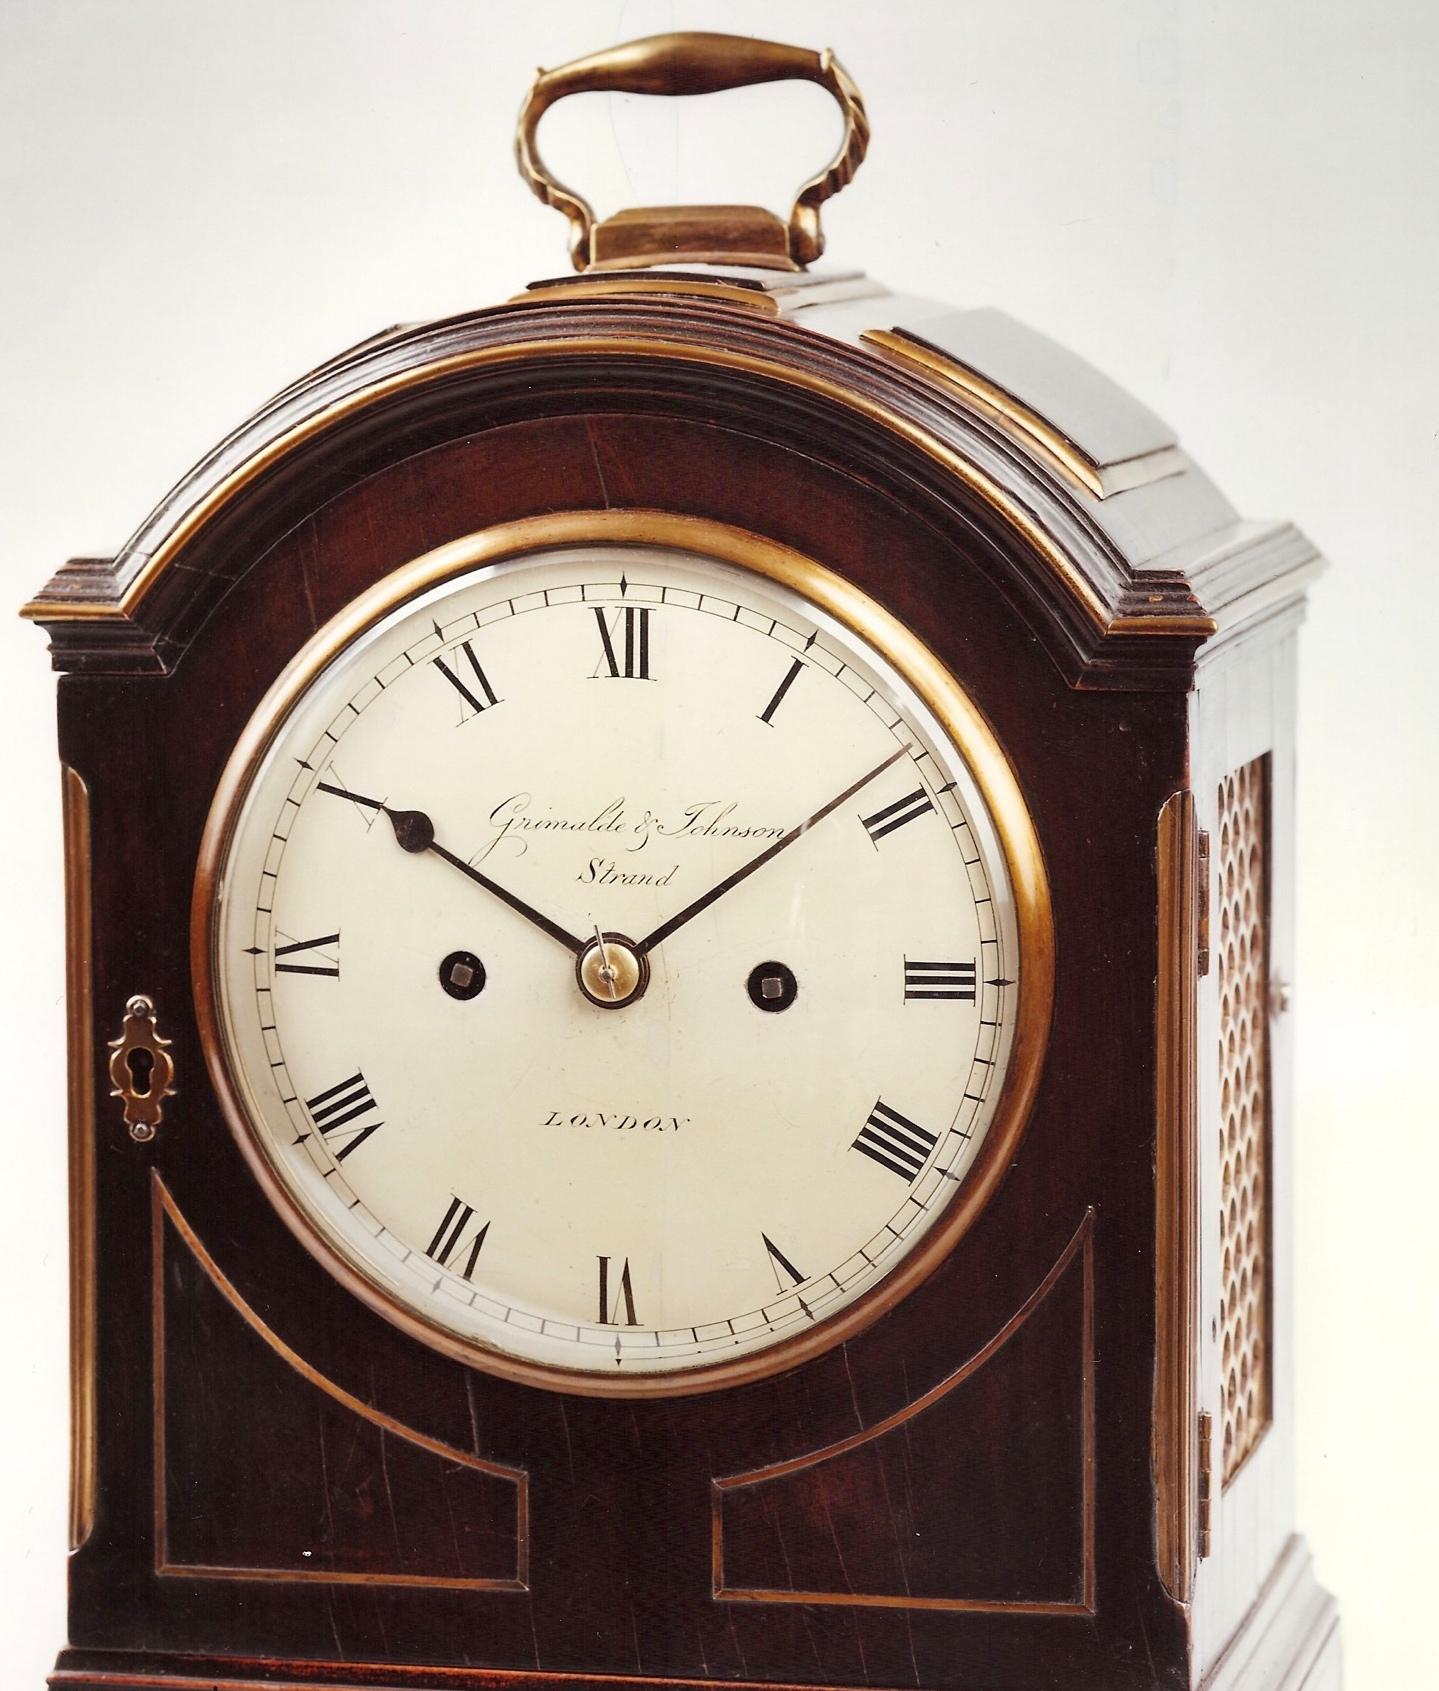 19th century clocks